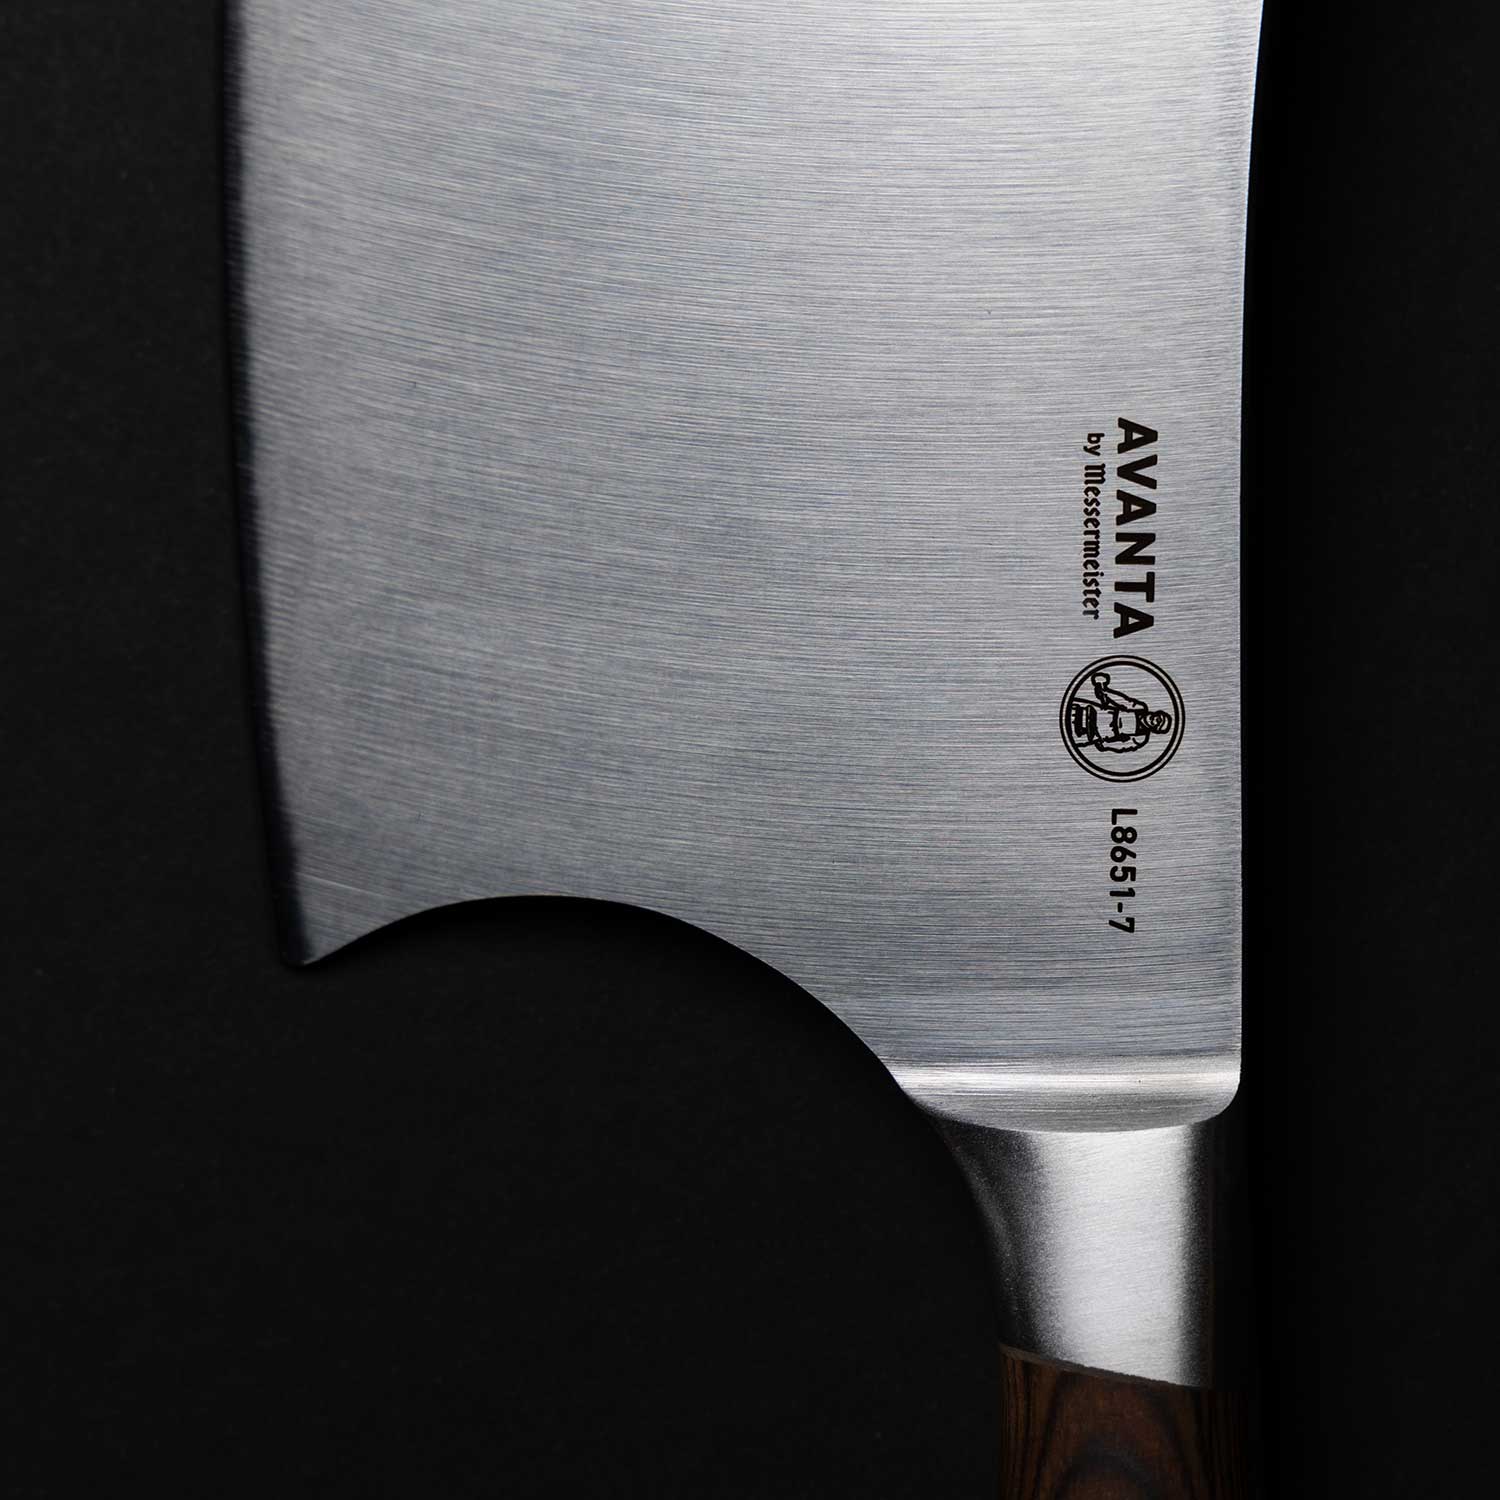 Grilling knives Cattara set 6pcs